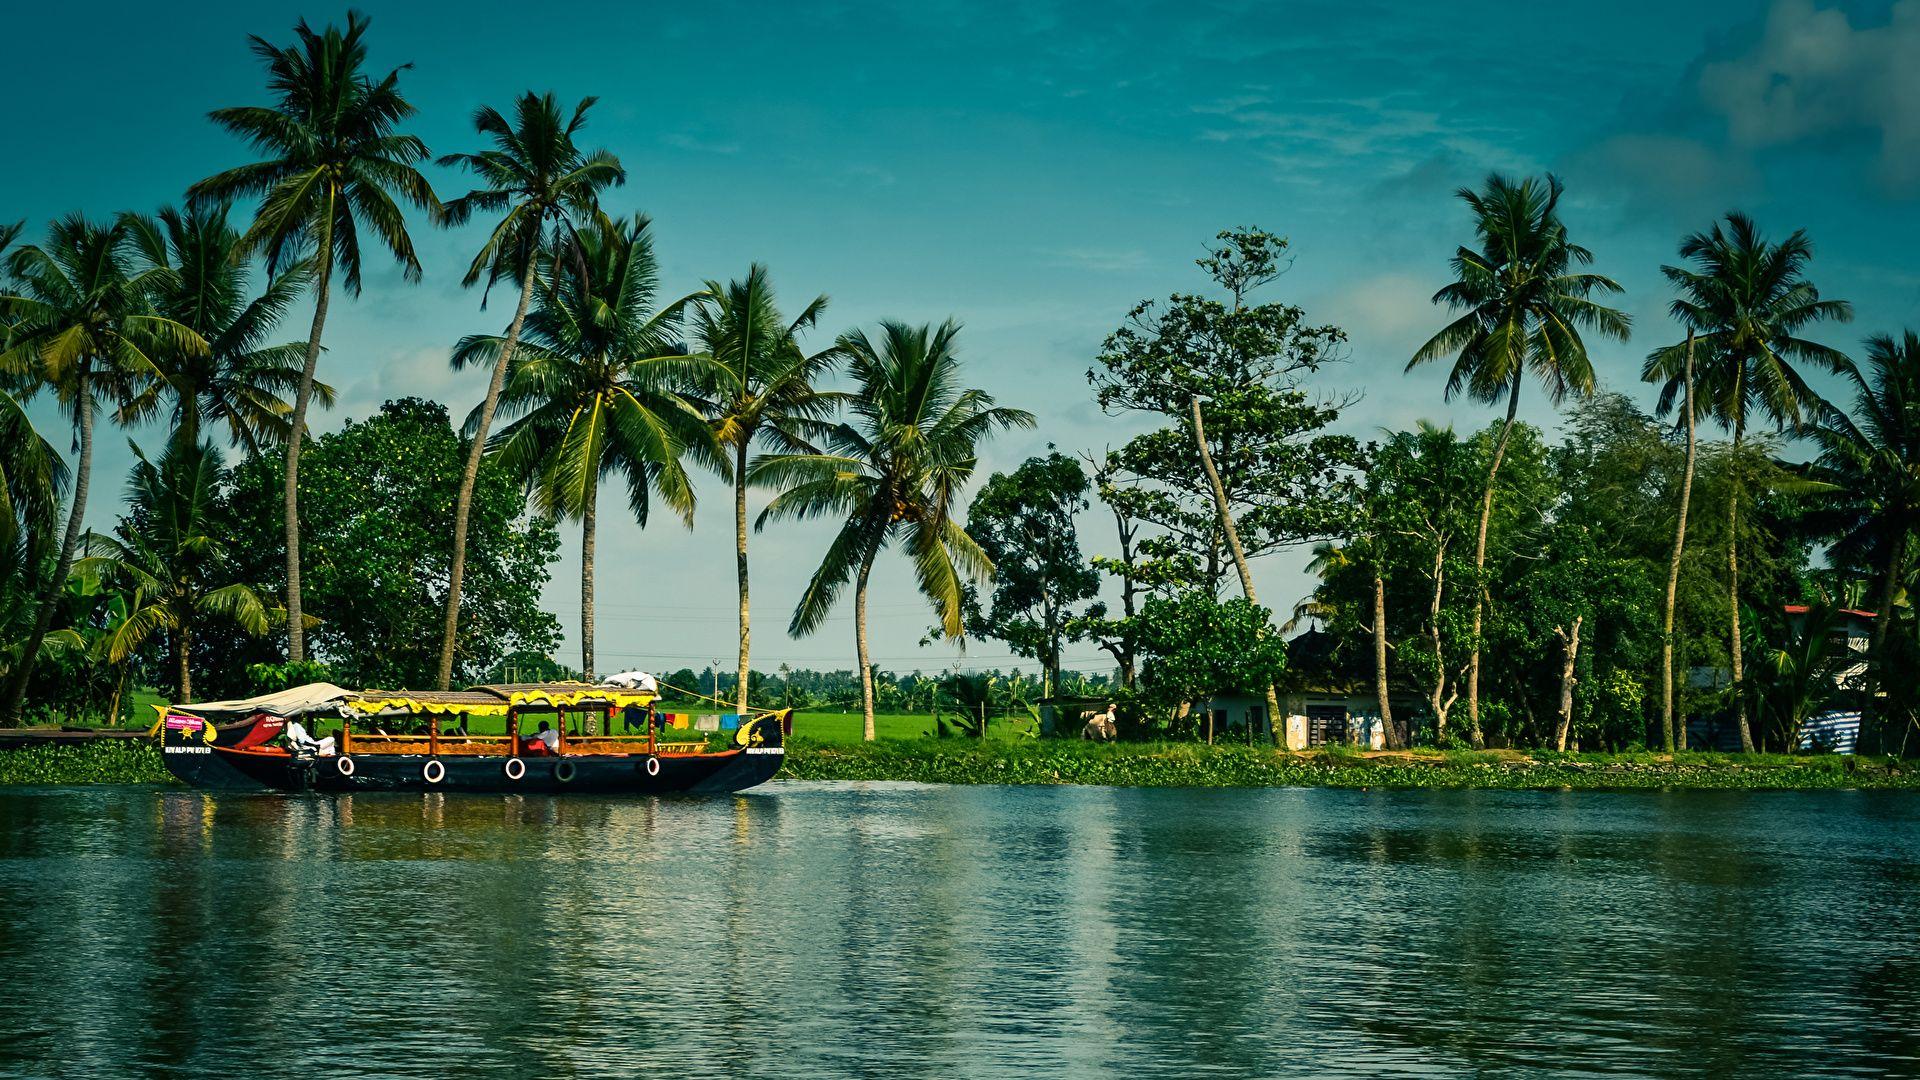 Kerala Backwaters Hd Wallpapers 1080p - #1 HD Wallpaper 4k | FREE